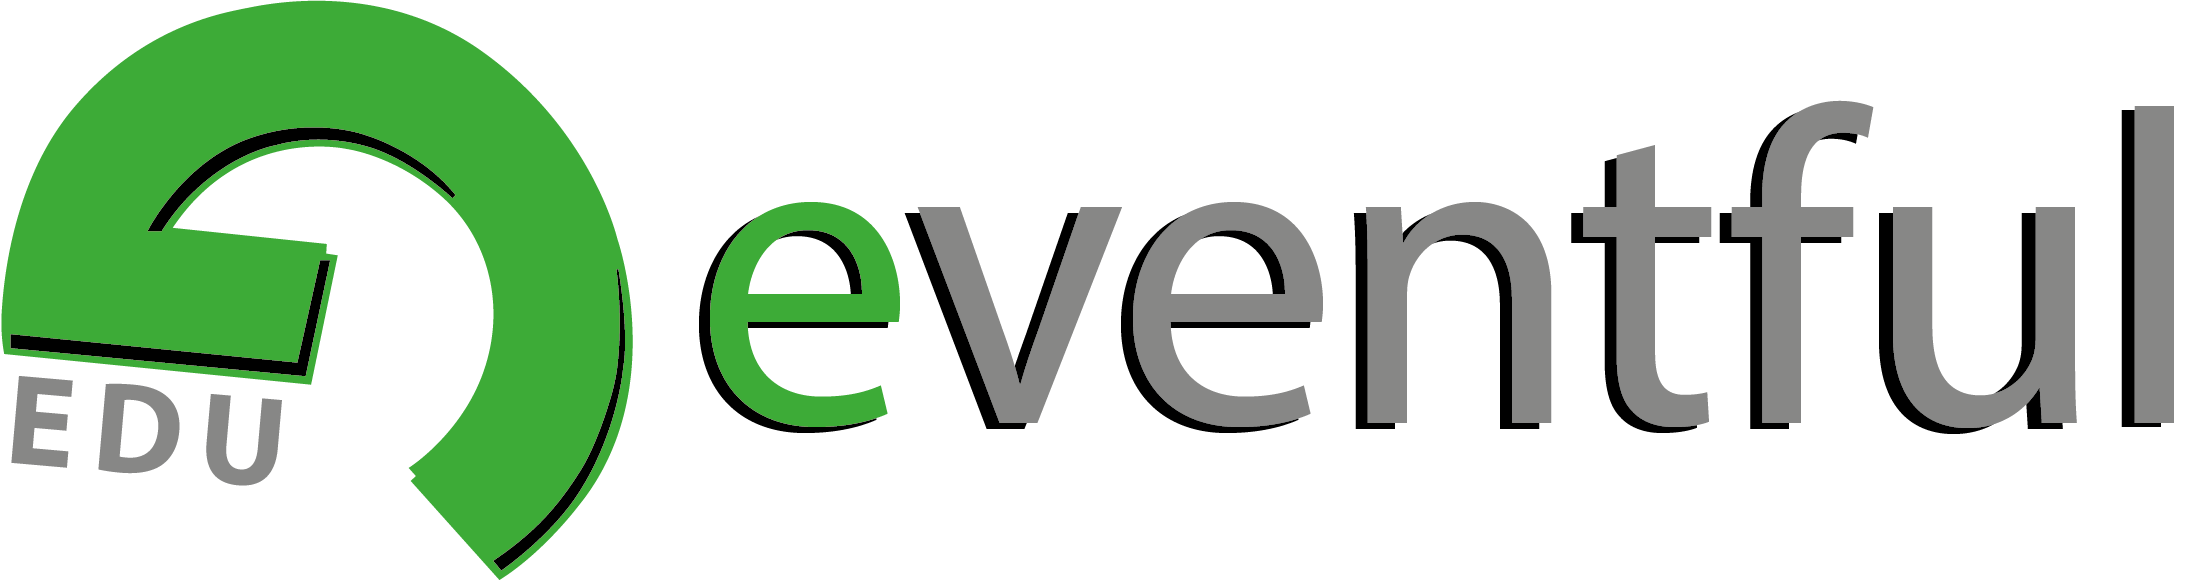 Eventful logo